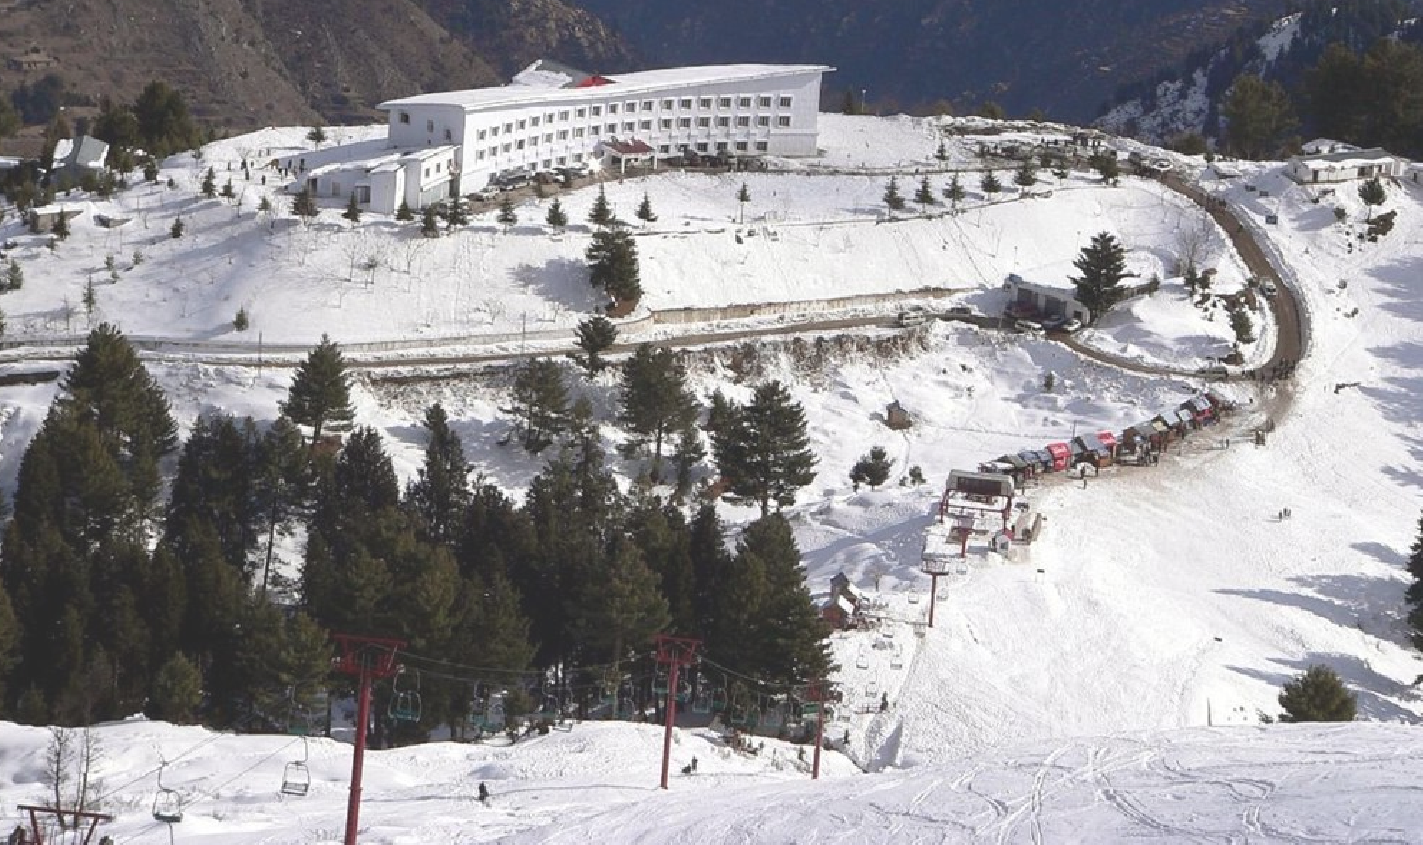 1. Malam Jabba Ski Resort: